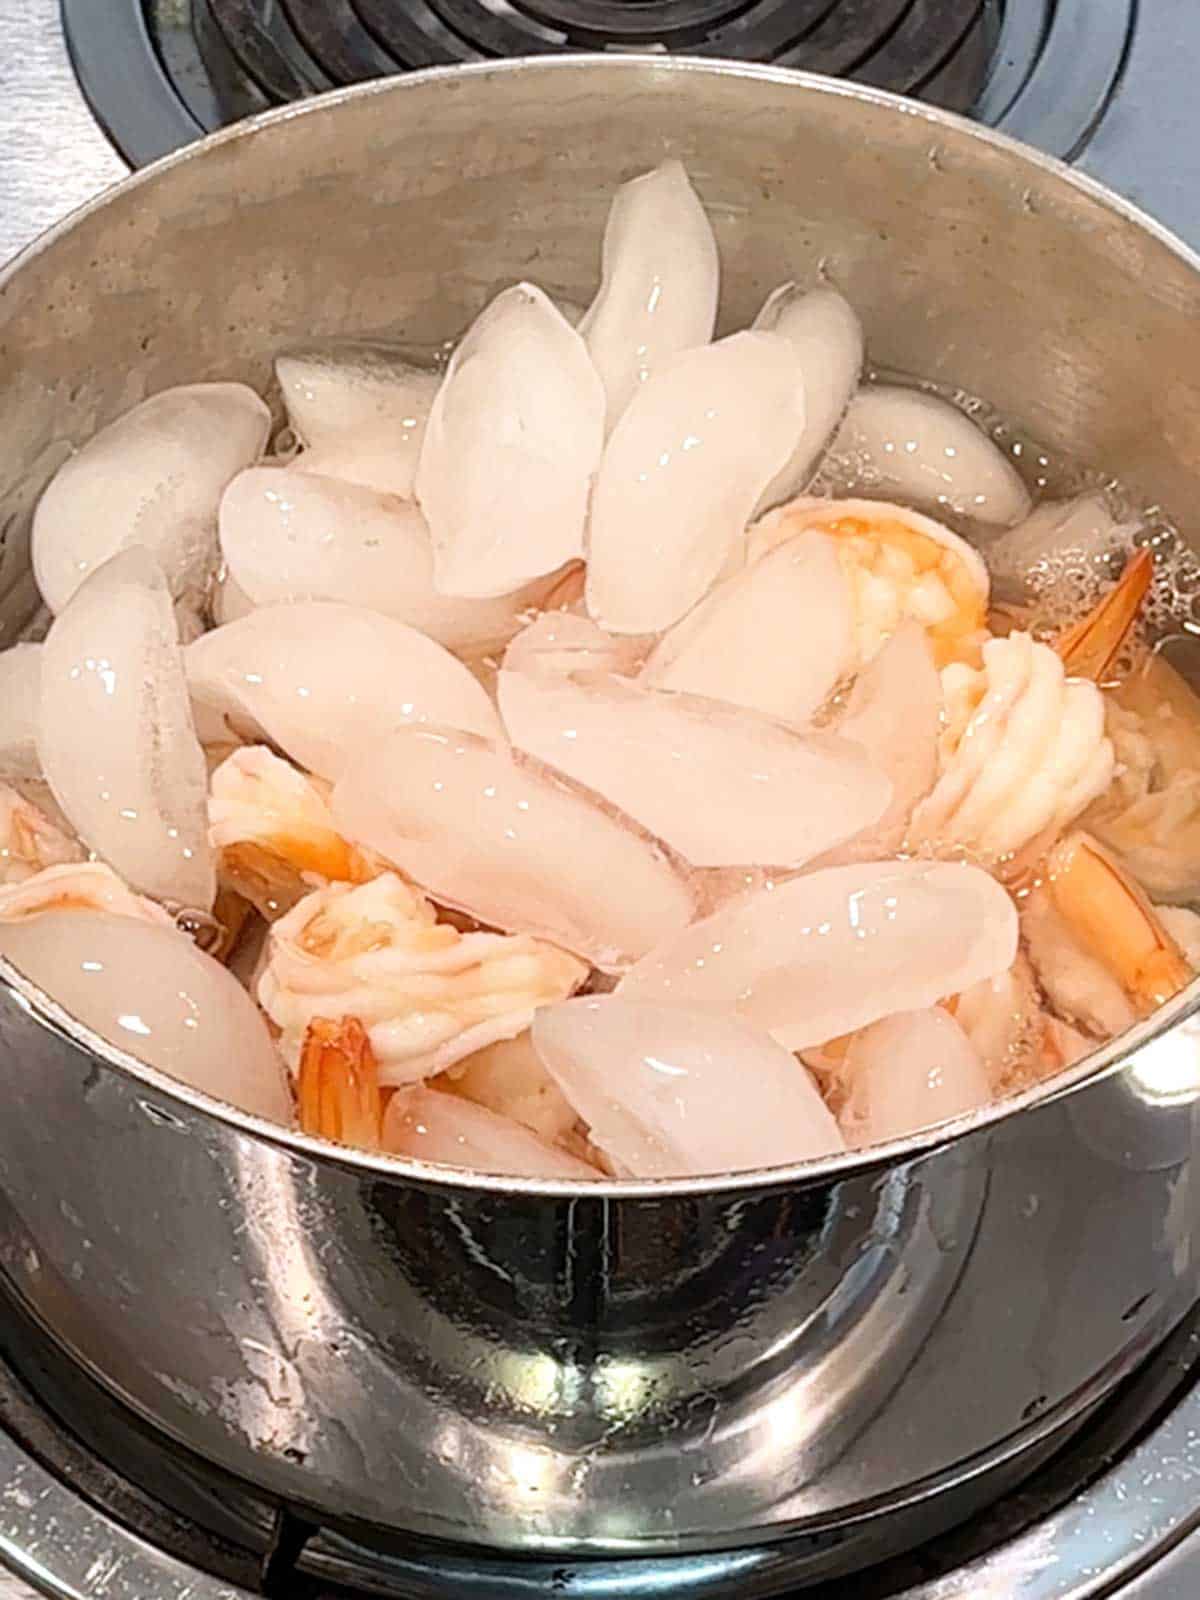 Shrimp in ice water.